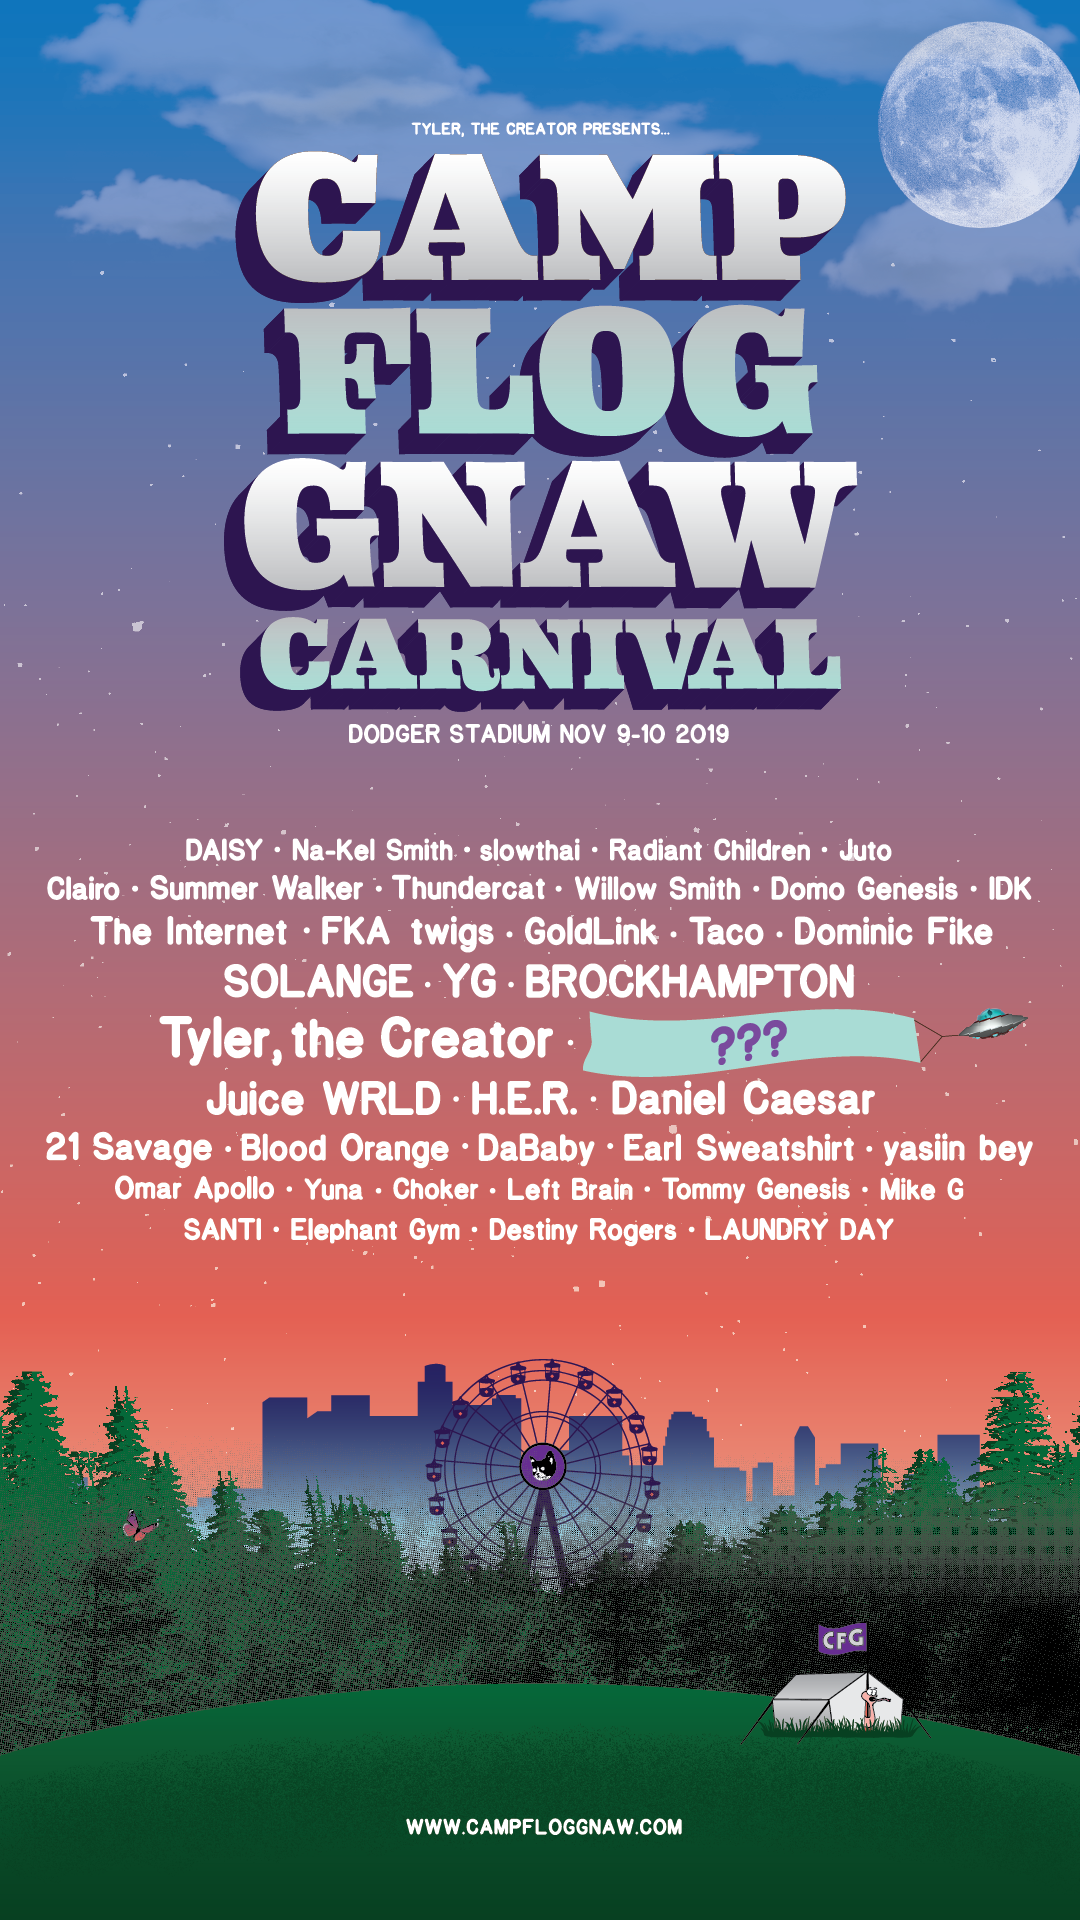 Tyler the Creator presents Camp Flog Gnaw Carnival - Dodger Stadium - Nov 9-10 2019